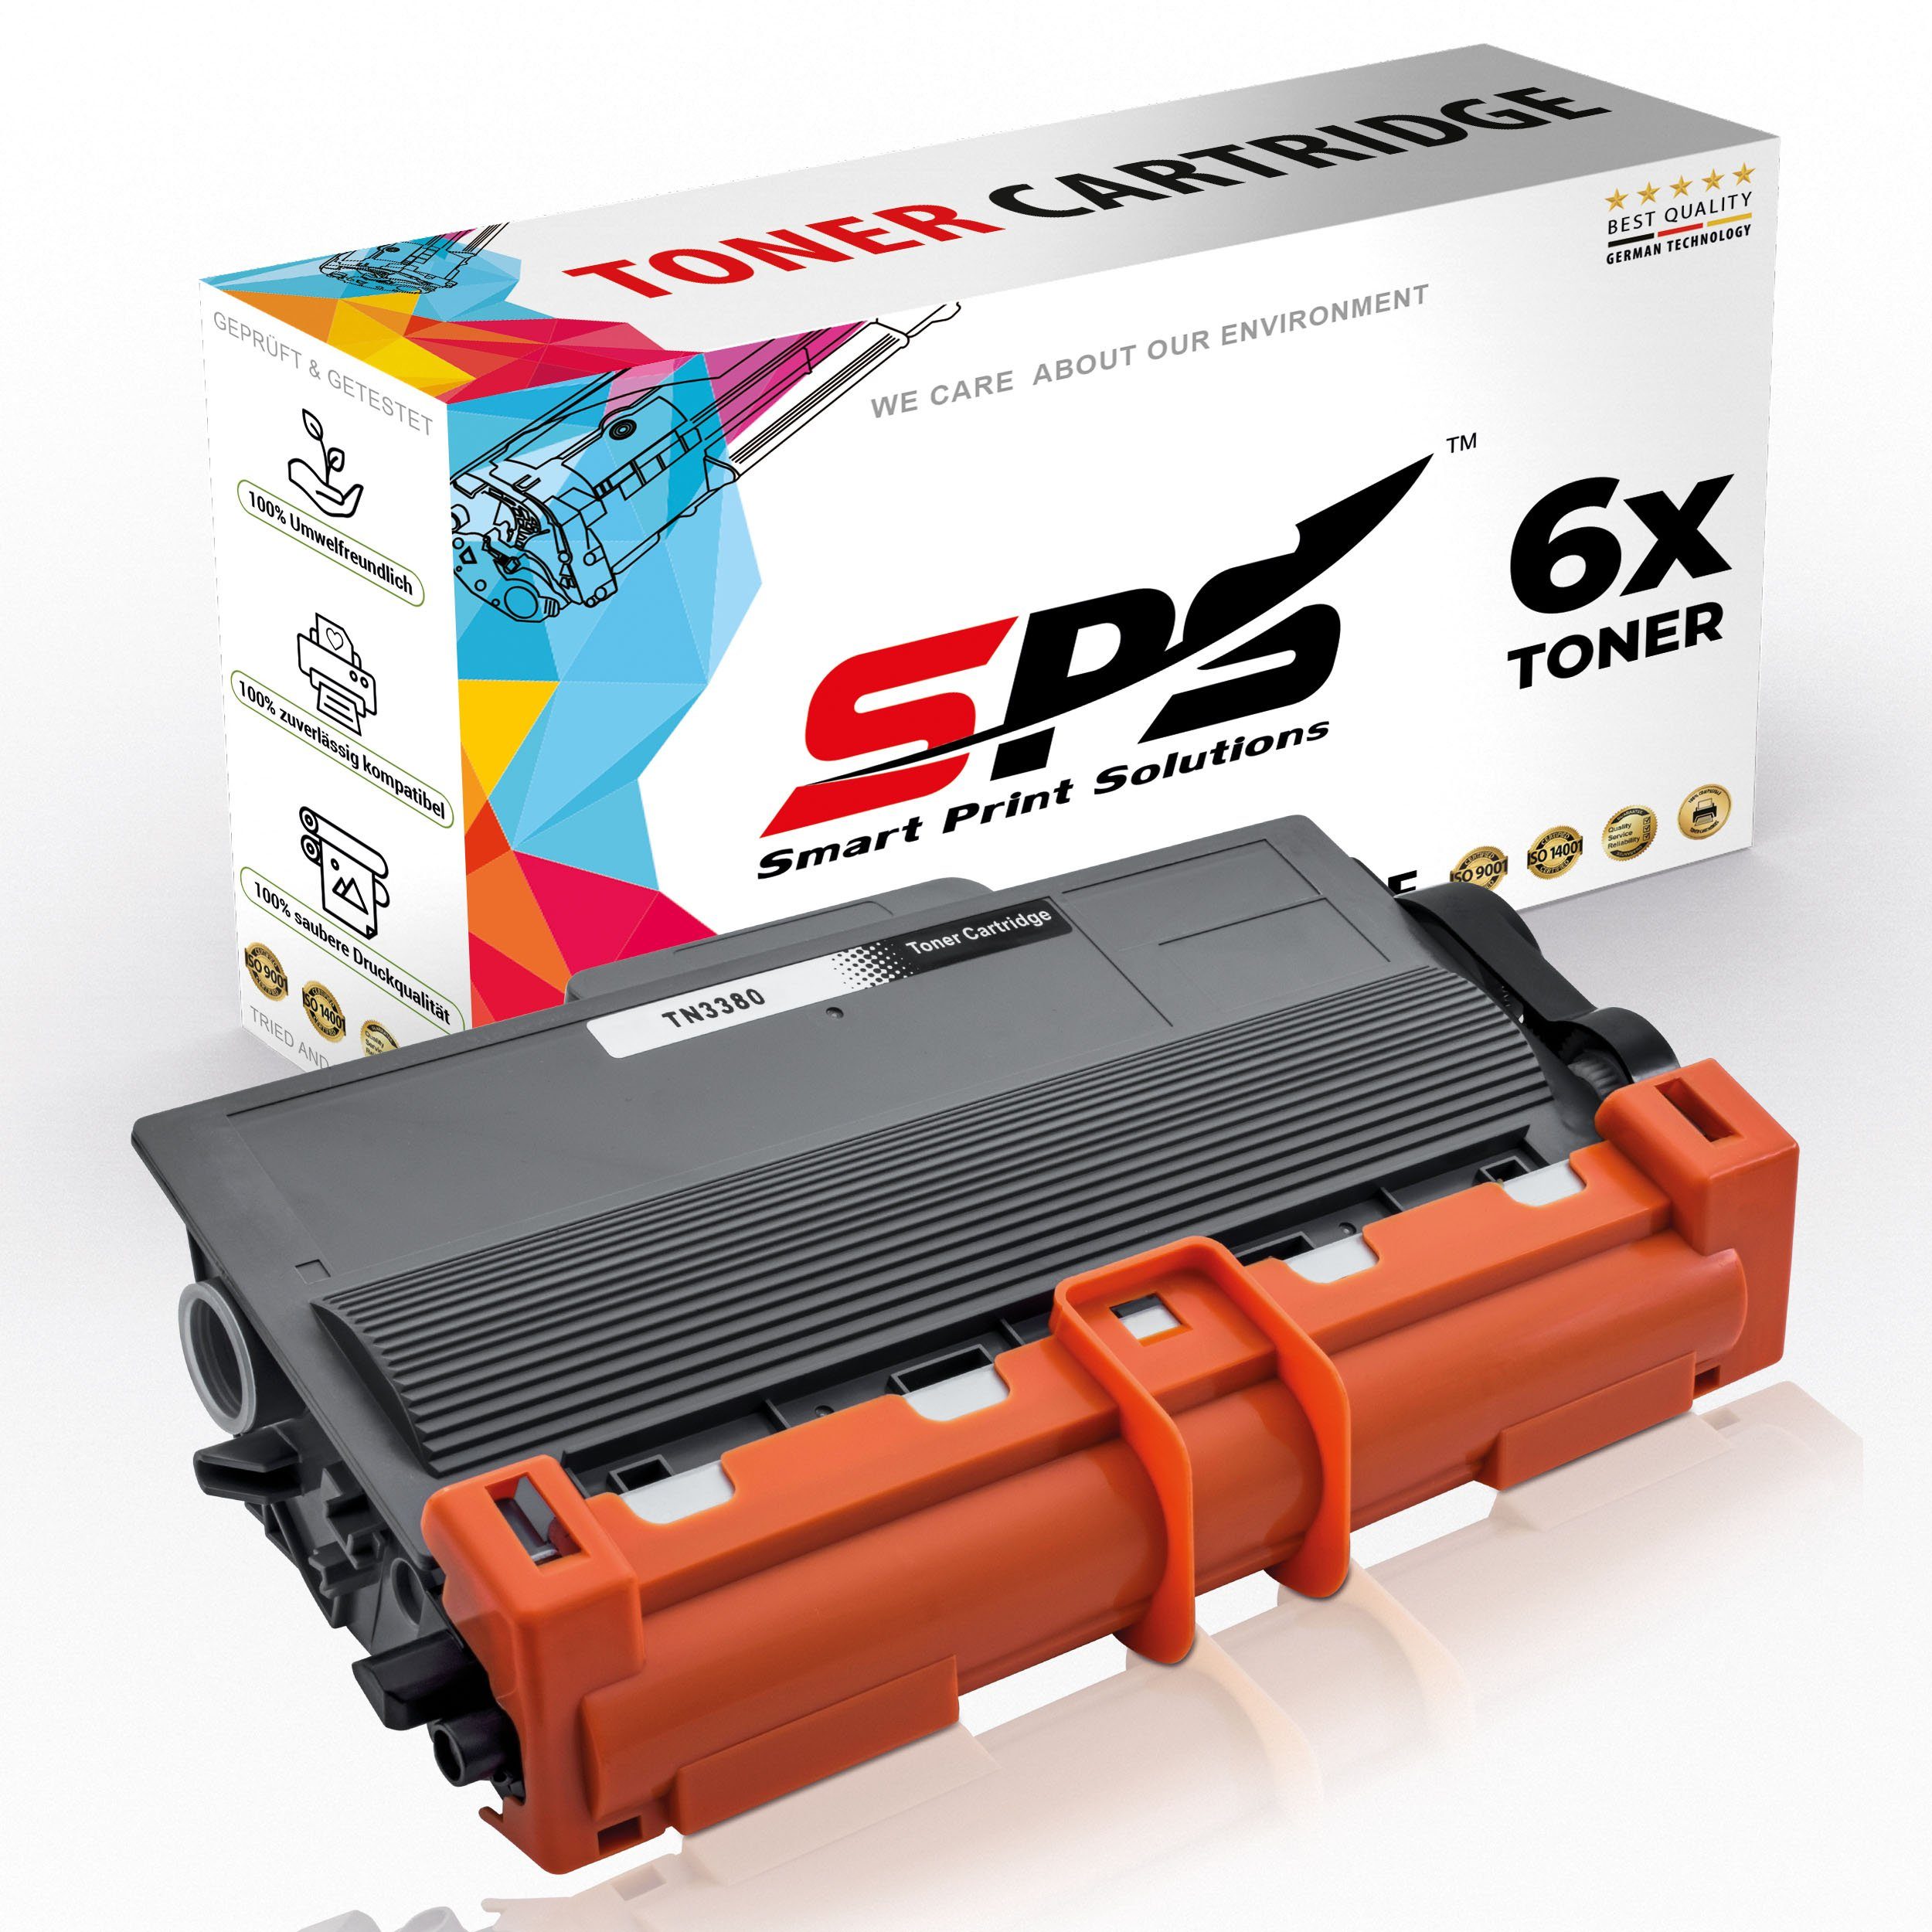 SPS Tonerkartusche Kompatibel für Brother HL-5450 TN-3380, (6er Pack) | Tonerpatronen